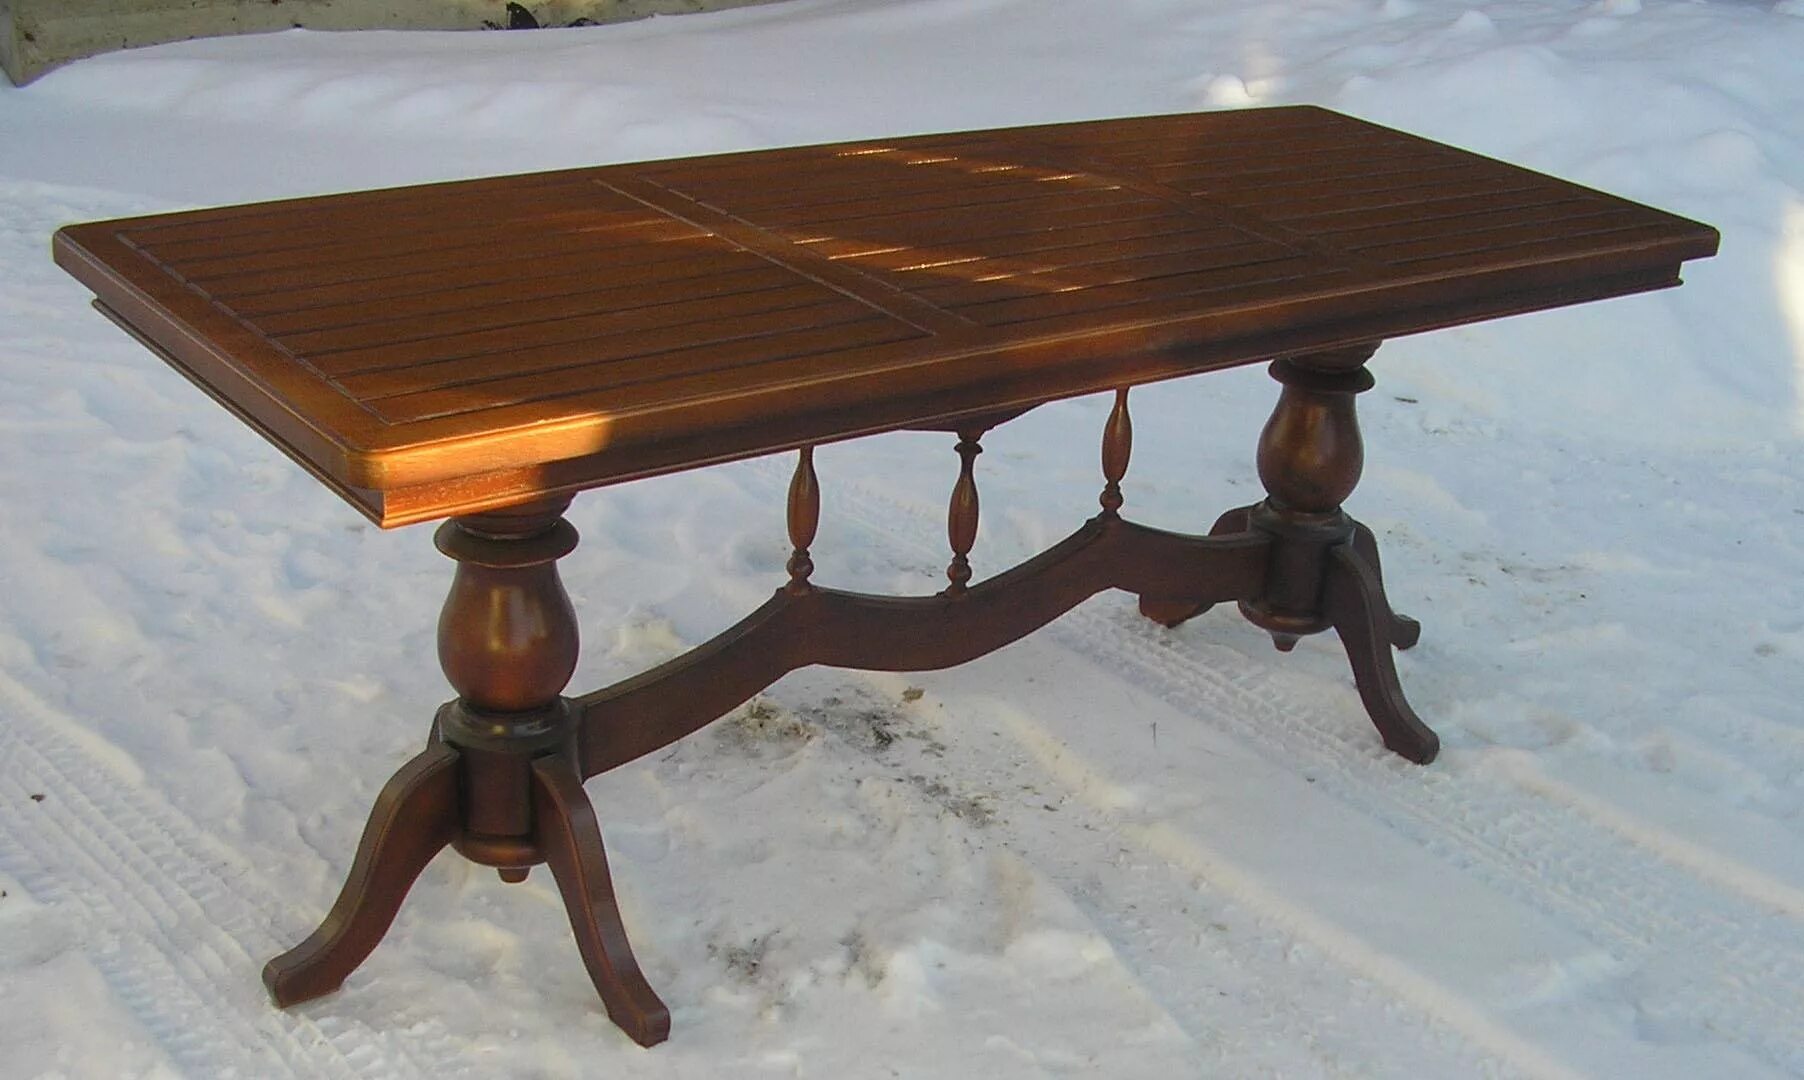 Д ван стол. Деревянный лакированный стол. Лакированный стол. Сильно лакированный стол. Деревянный лакированный стол с зеркалом над ним.